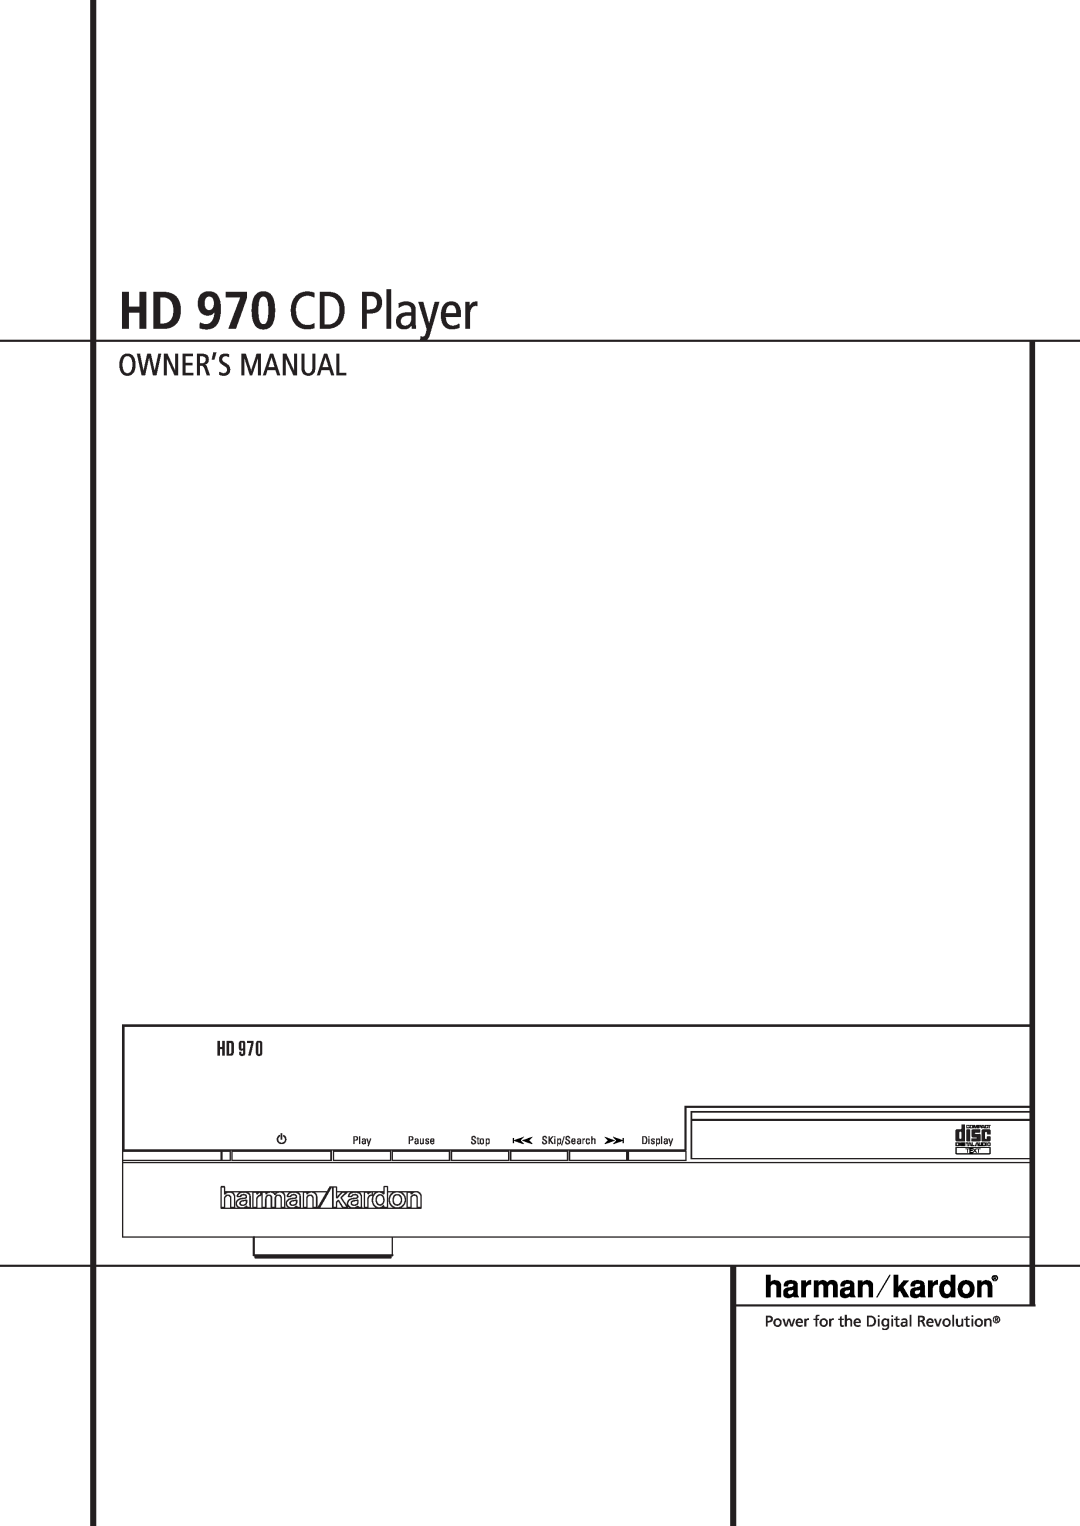 Harman-Kardon owner manual HD 970 CD Player, Pause, Stop, SKip/Search, Display 